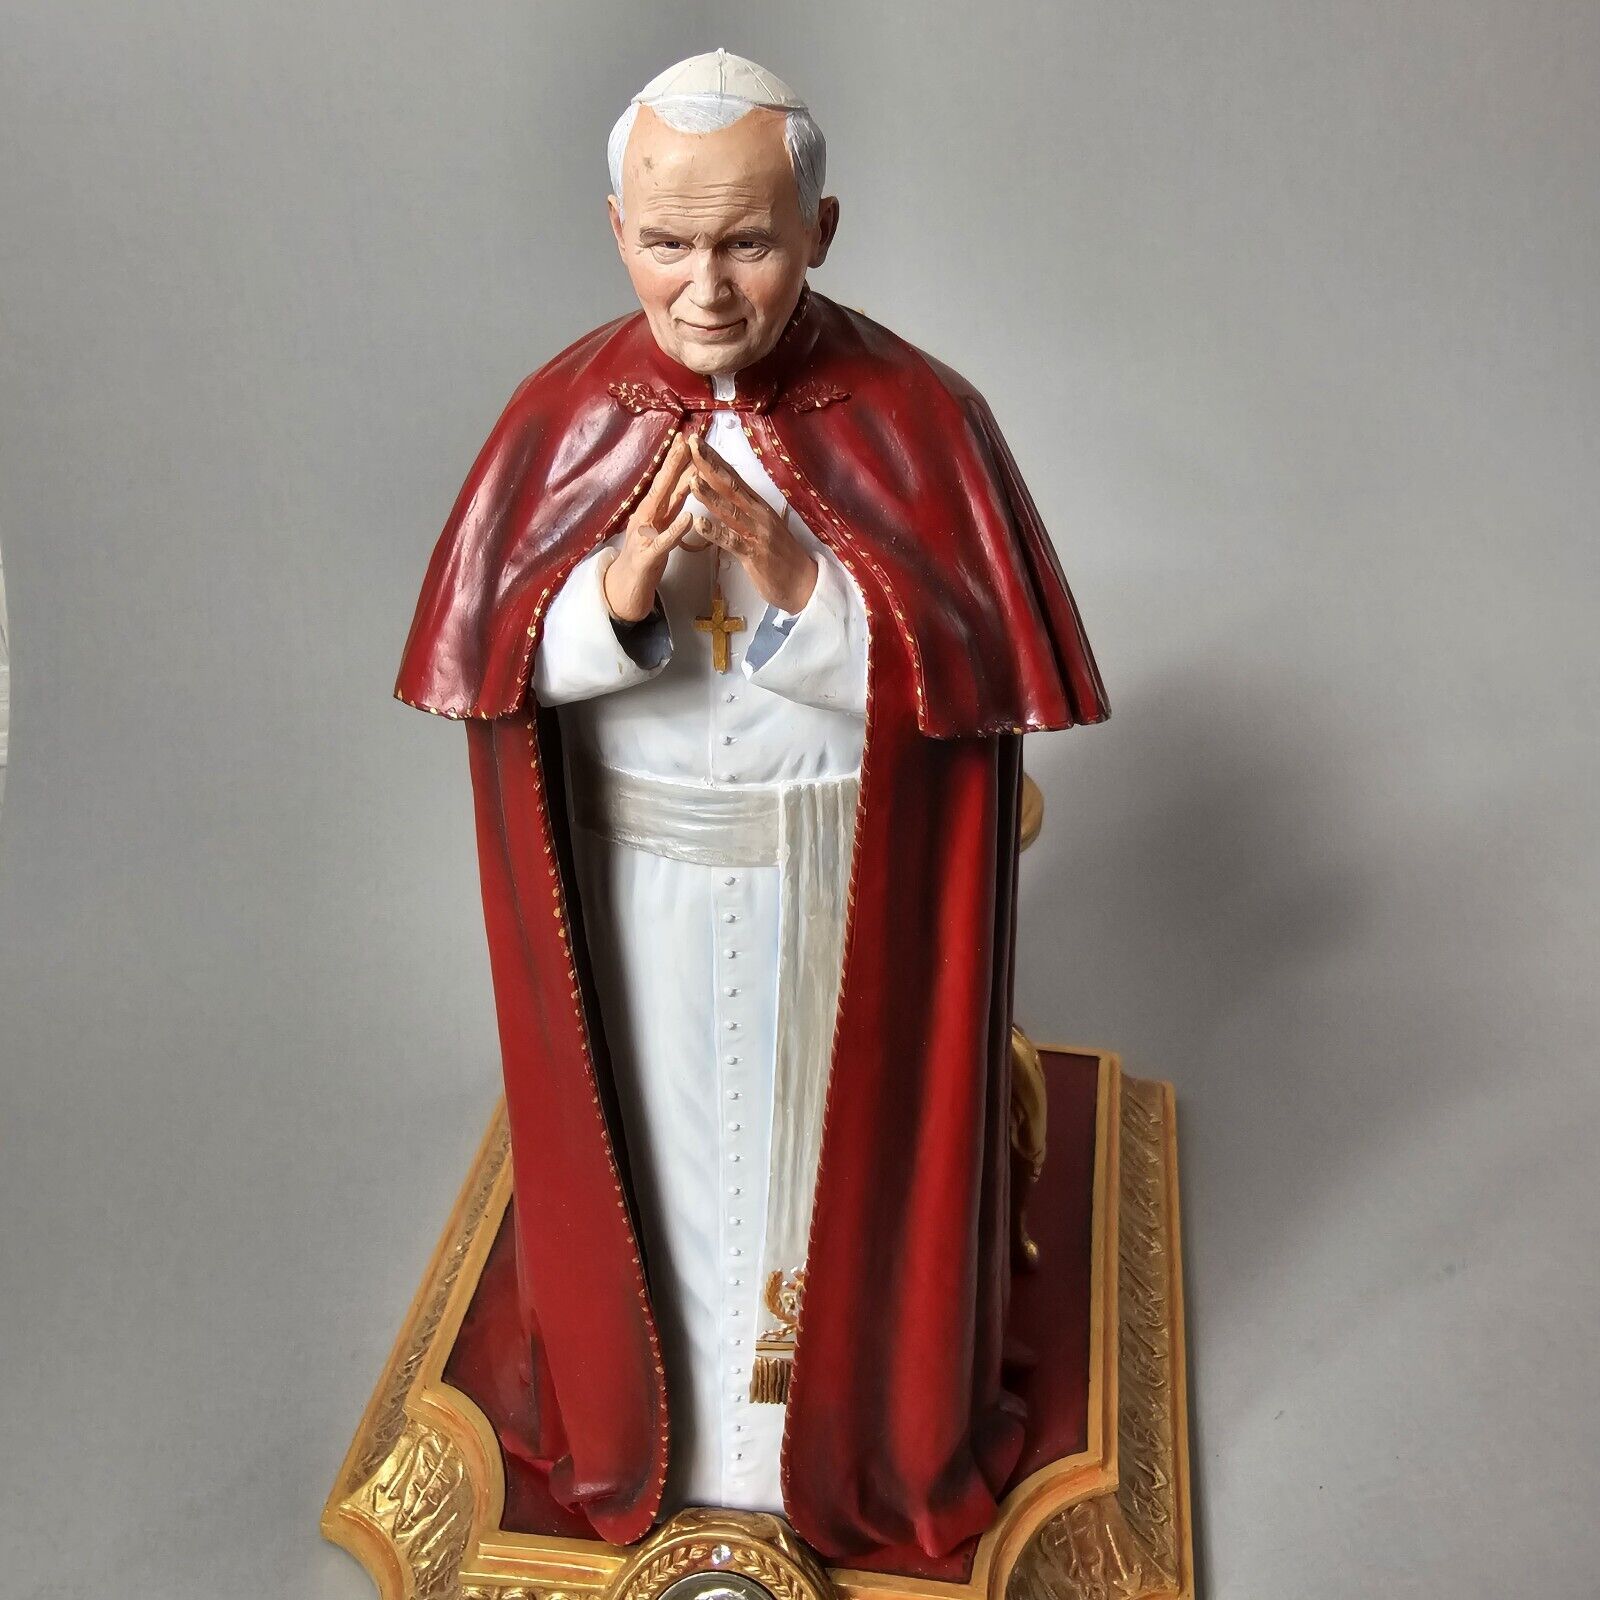 A Papal Blessing Religious Figure / Statue Danbury Mint 